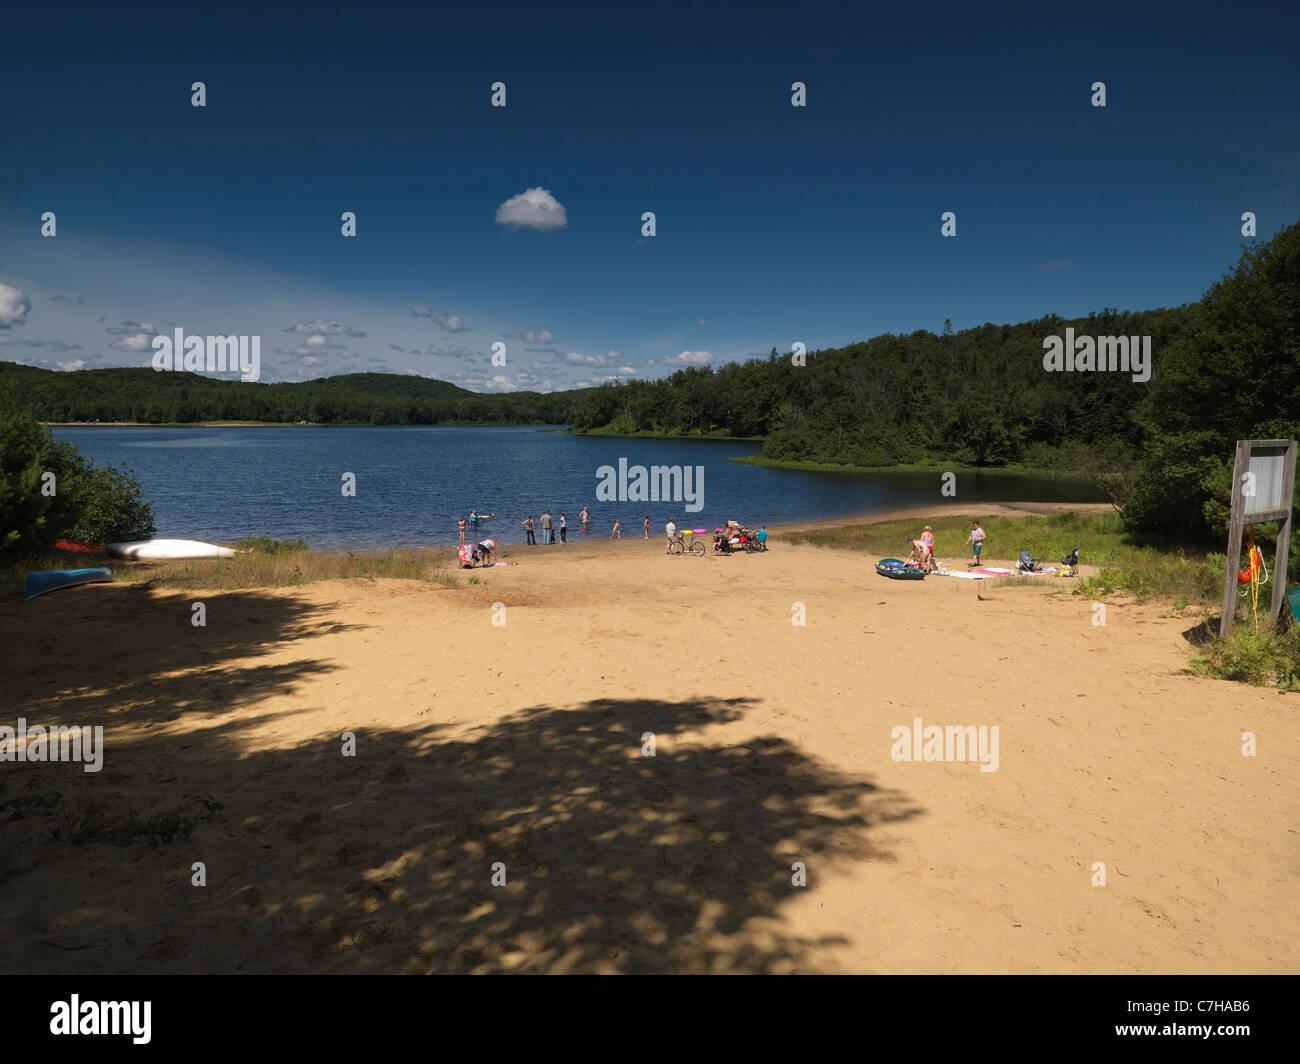 Arrowhead lake beach summertime scenery at Arrowhead Provincial Park, Ontario, Canada. Stock Photo